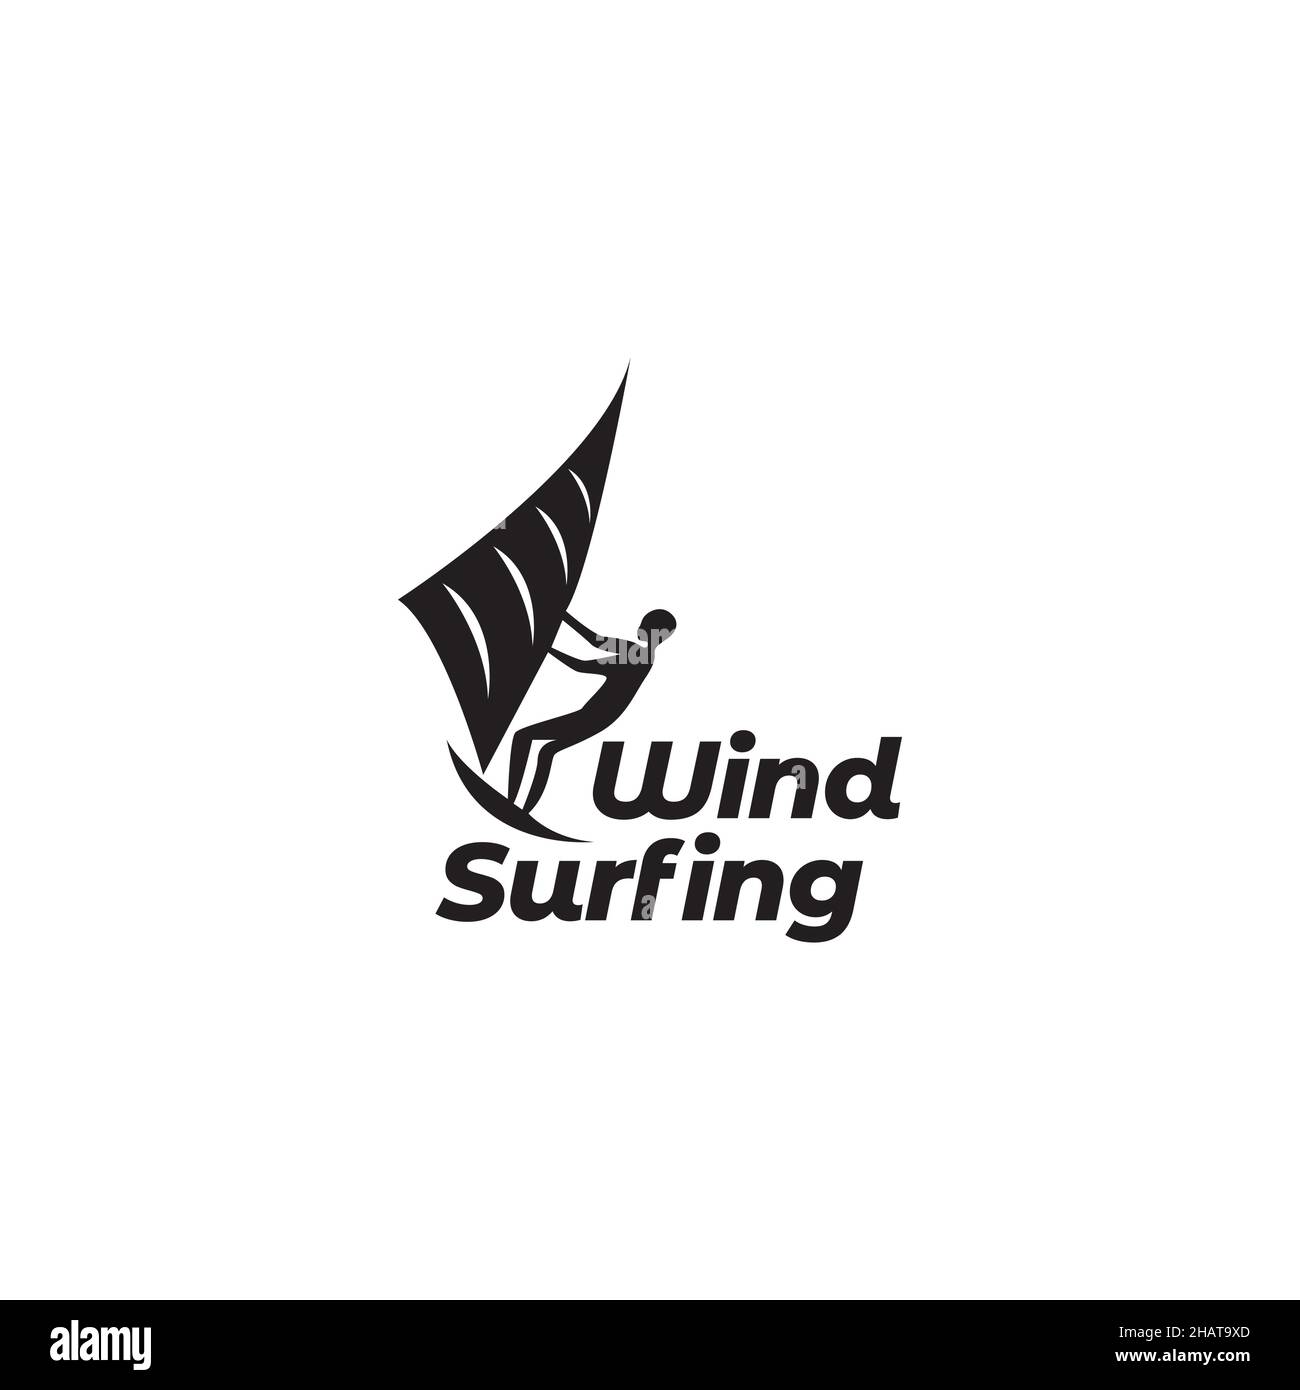 silhouette man wind surfing logo symbol icon vector graphic design illustration idea creative Stock Vector